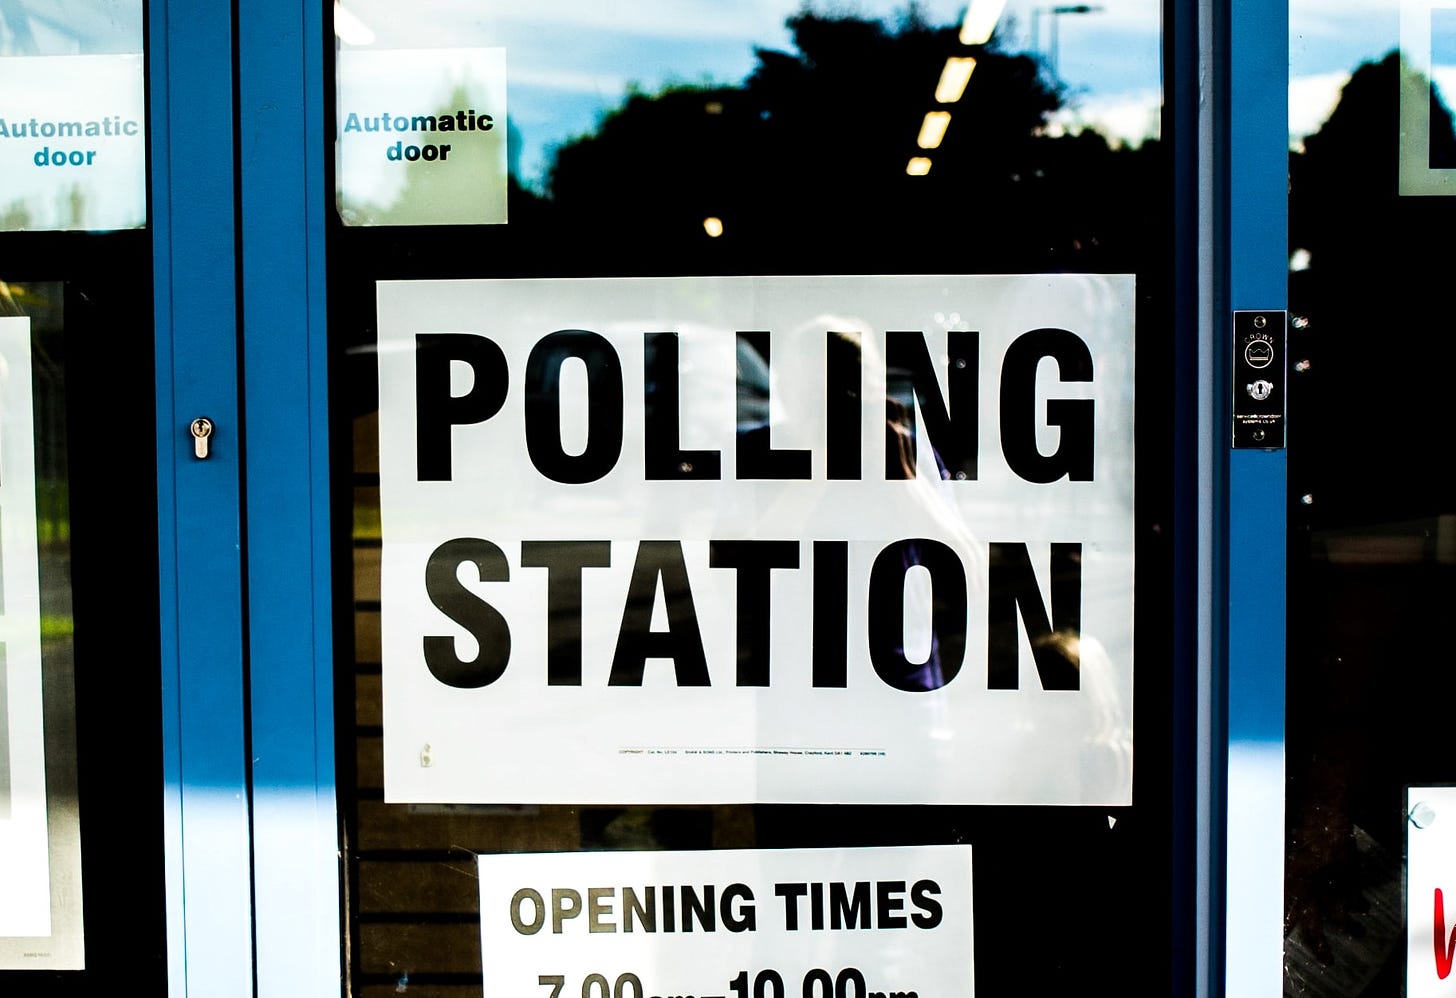 Polling station. Picture by Elliott Stallion on Unsplash